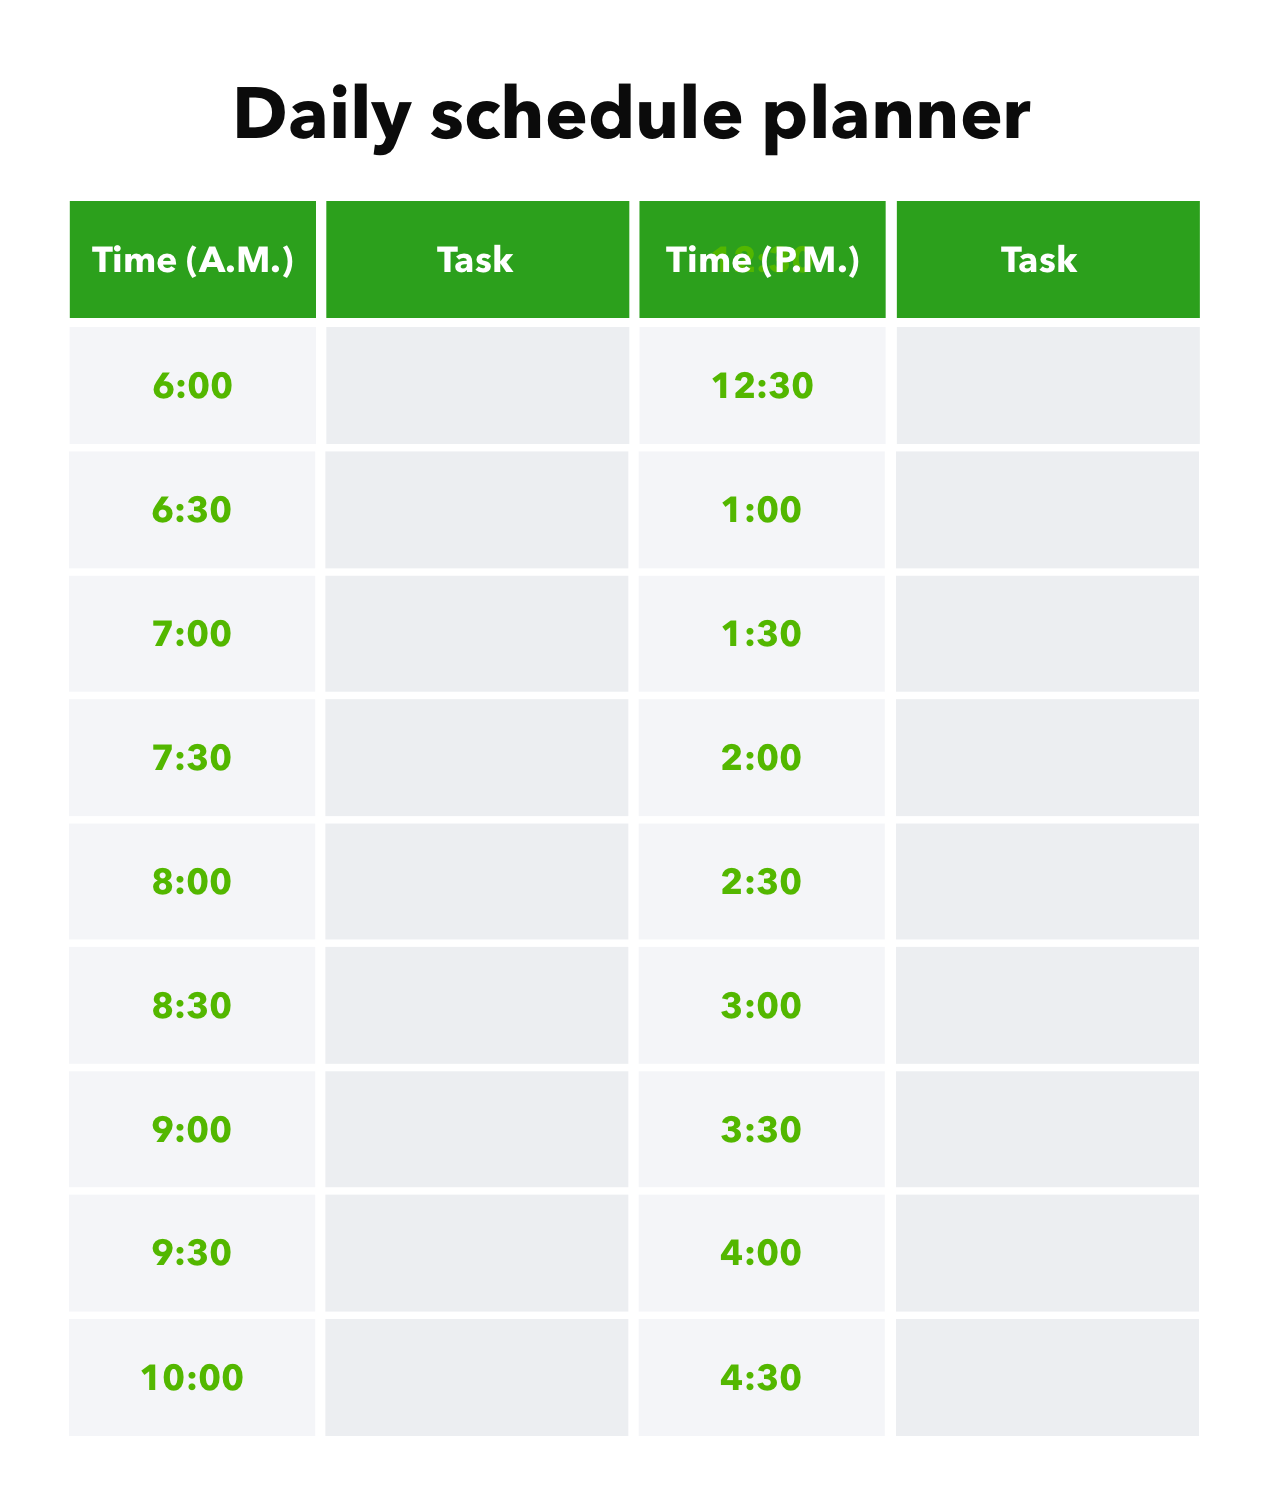 Daily schedule planner